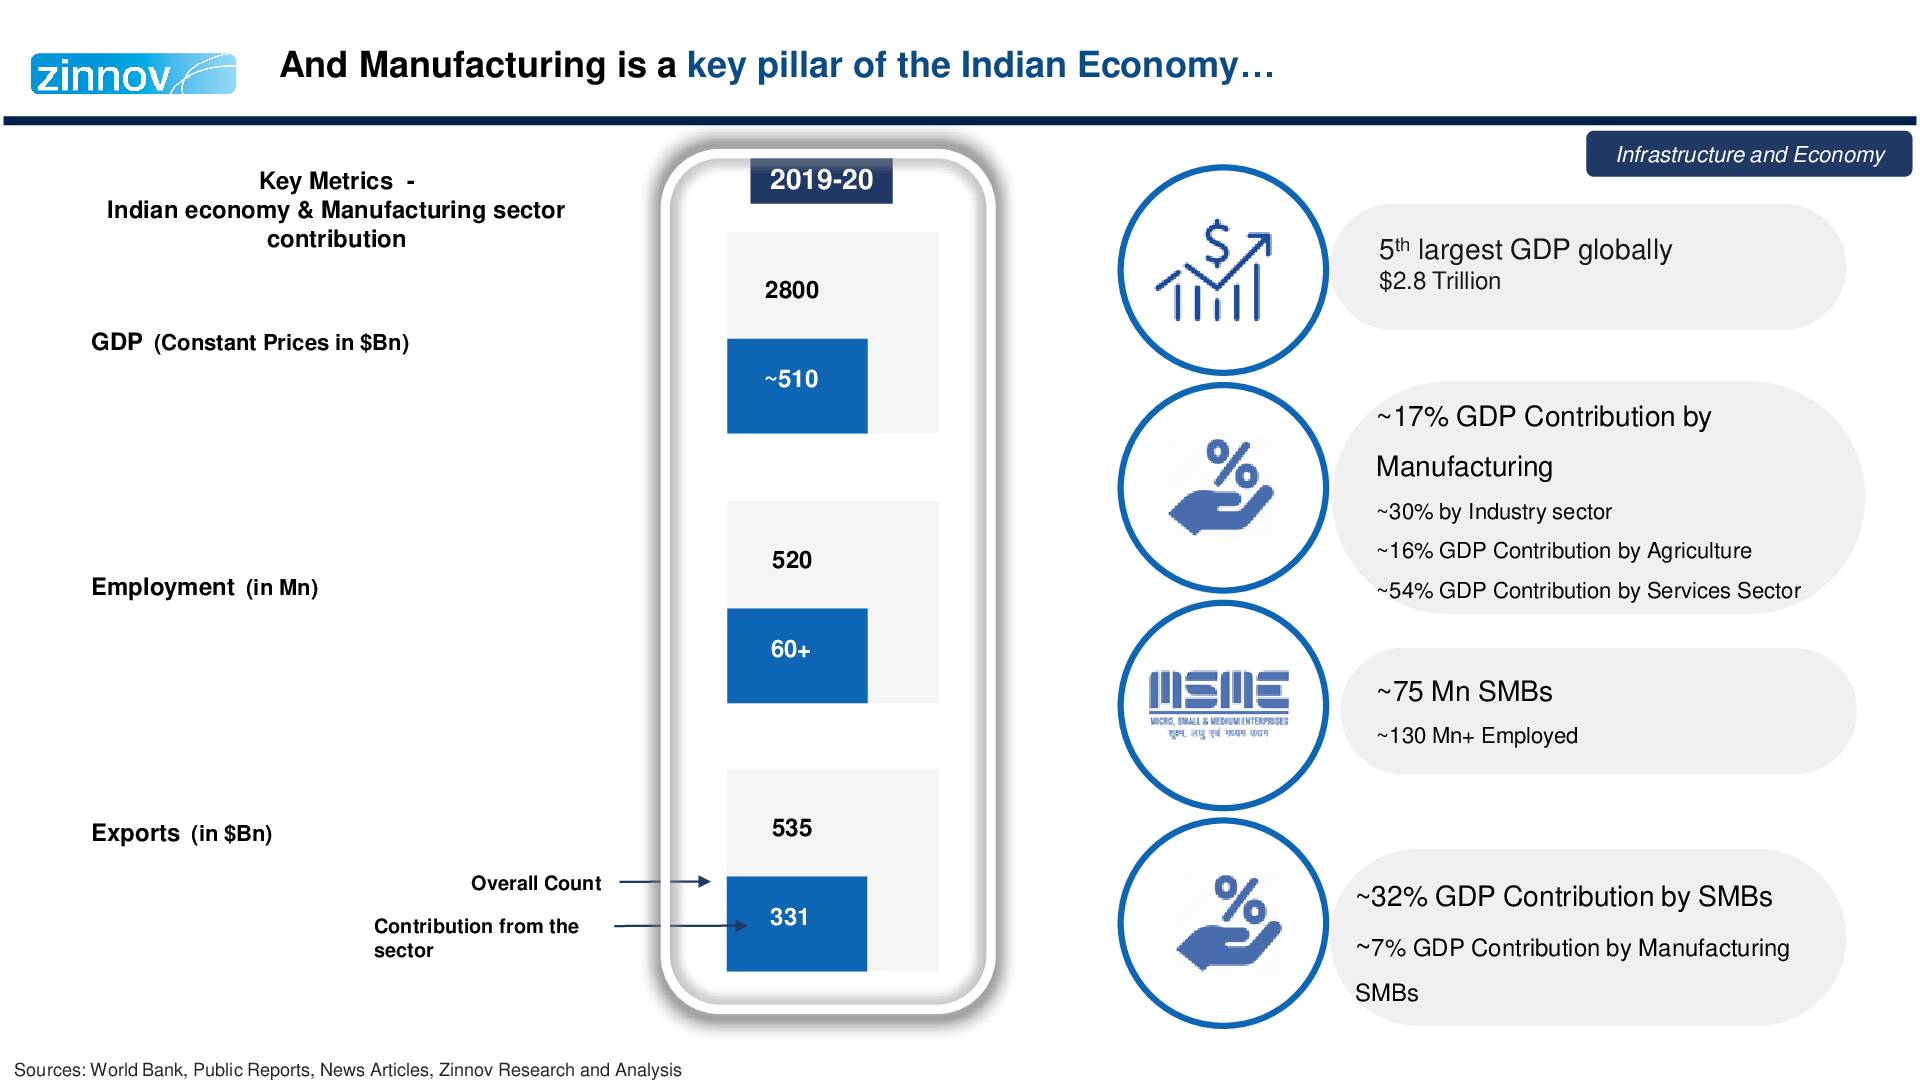 India A Preferred Manufacturing Destination12